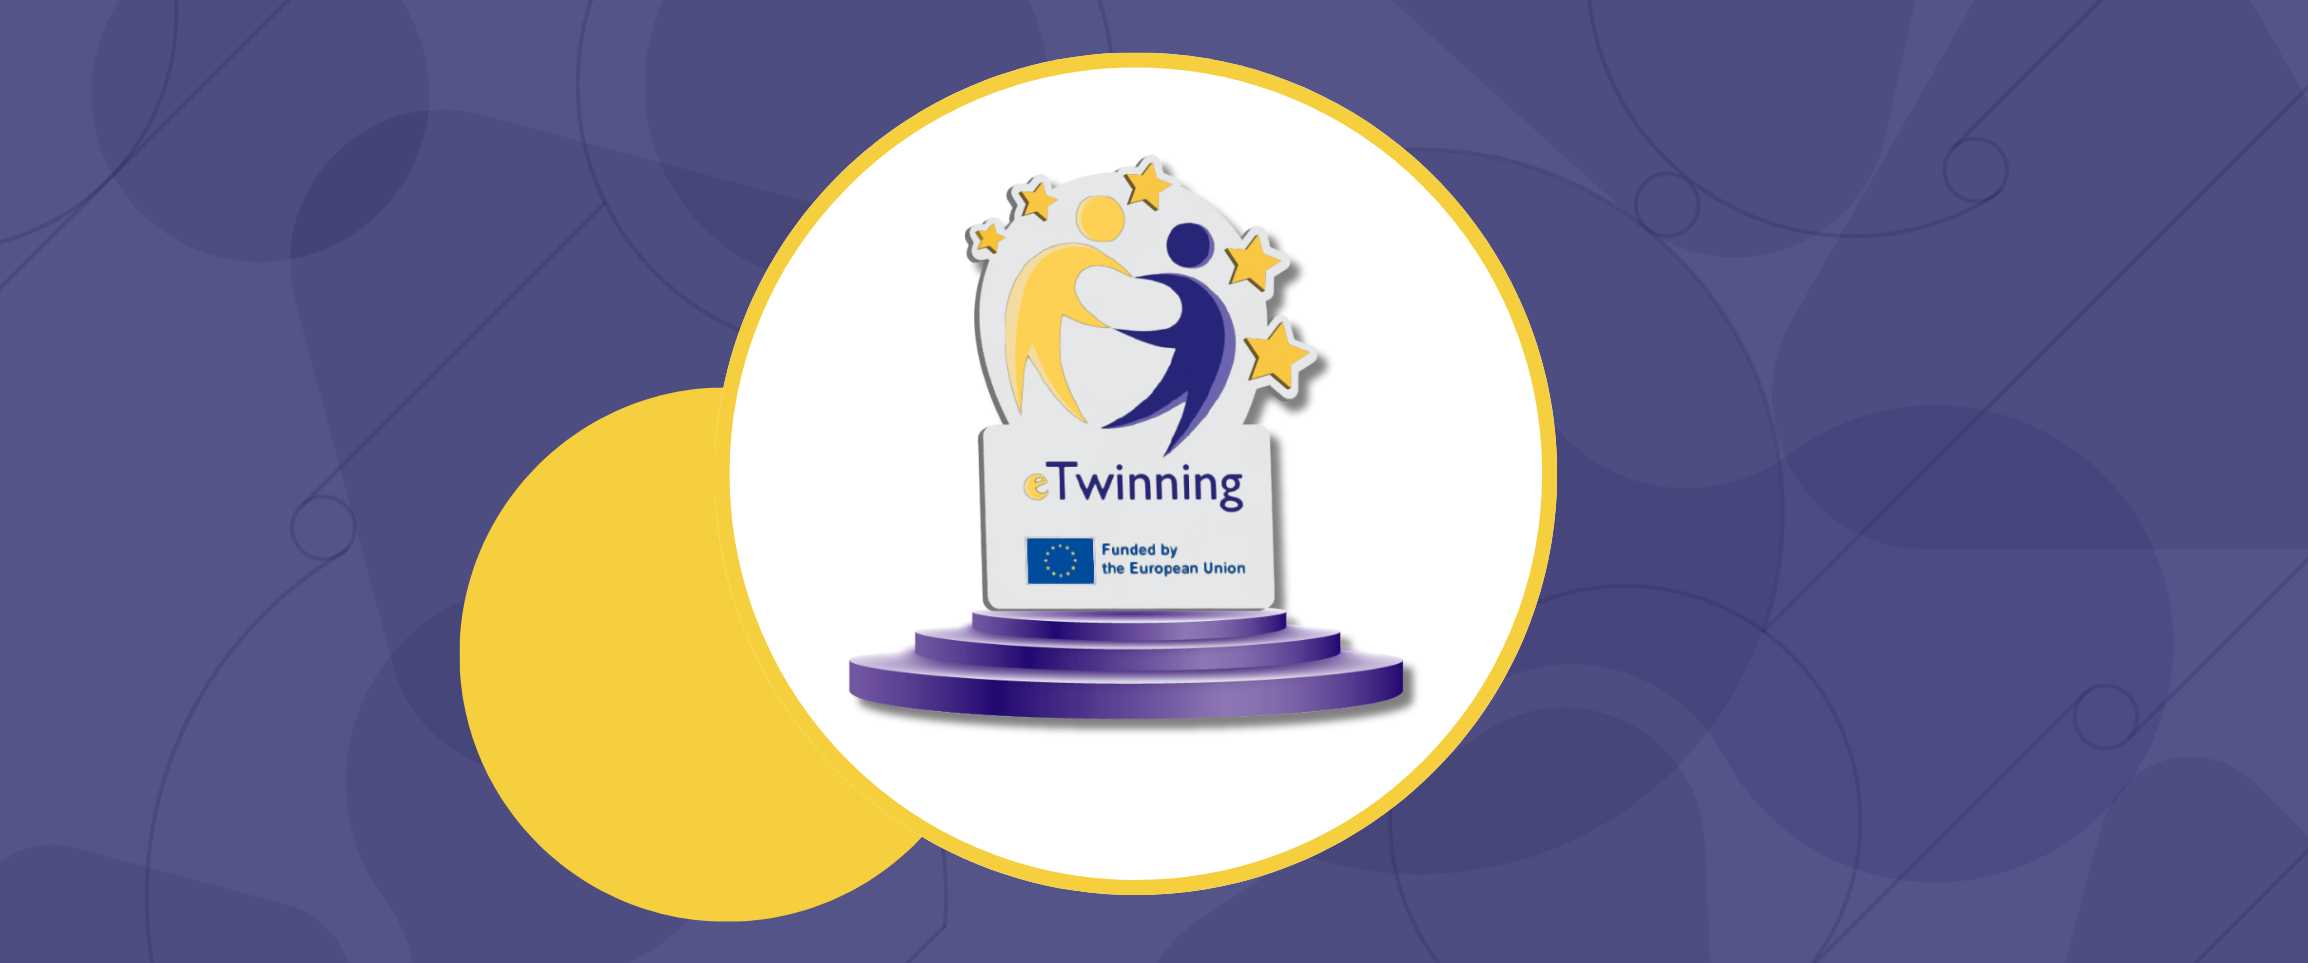 eTwinning European Prize